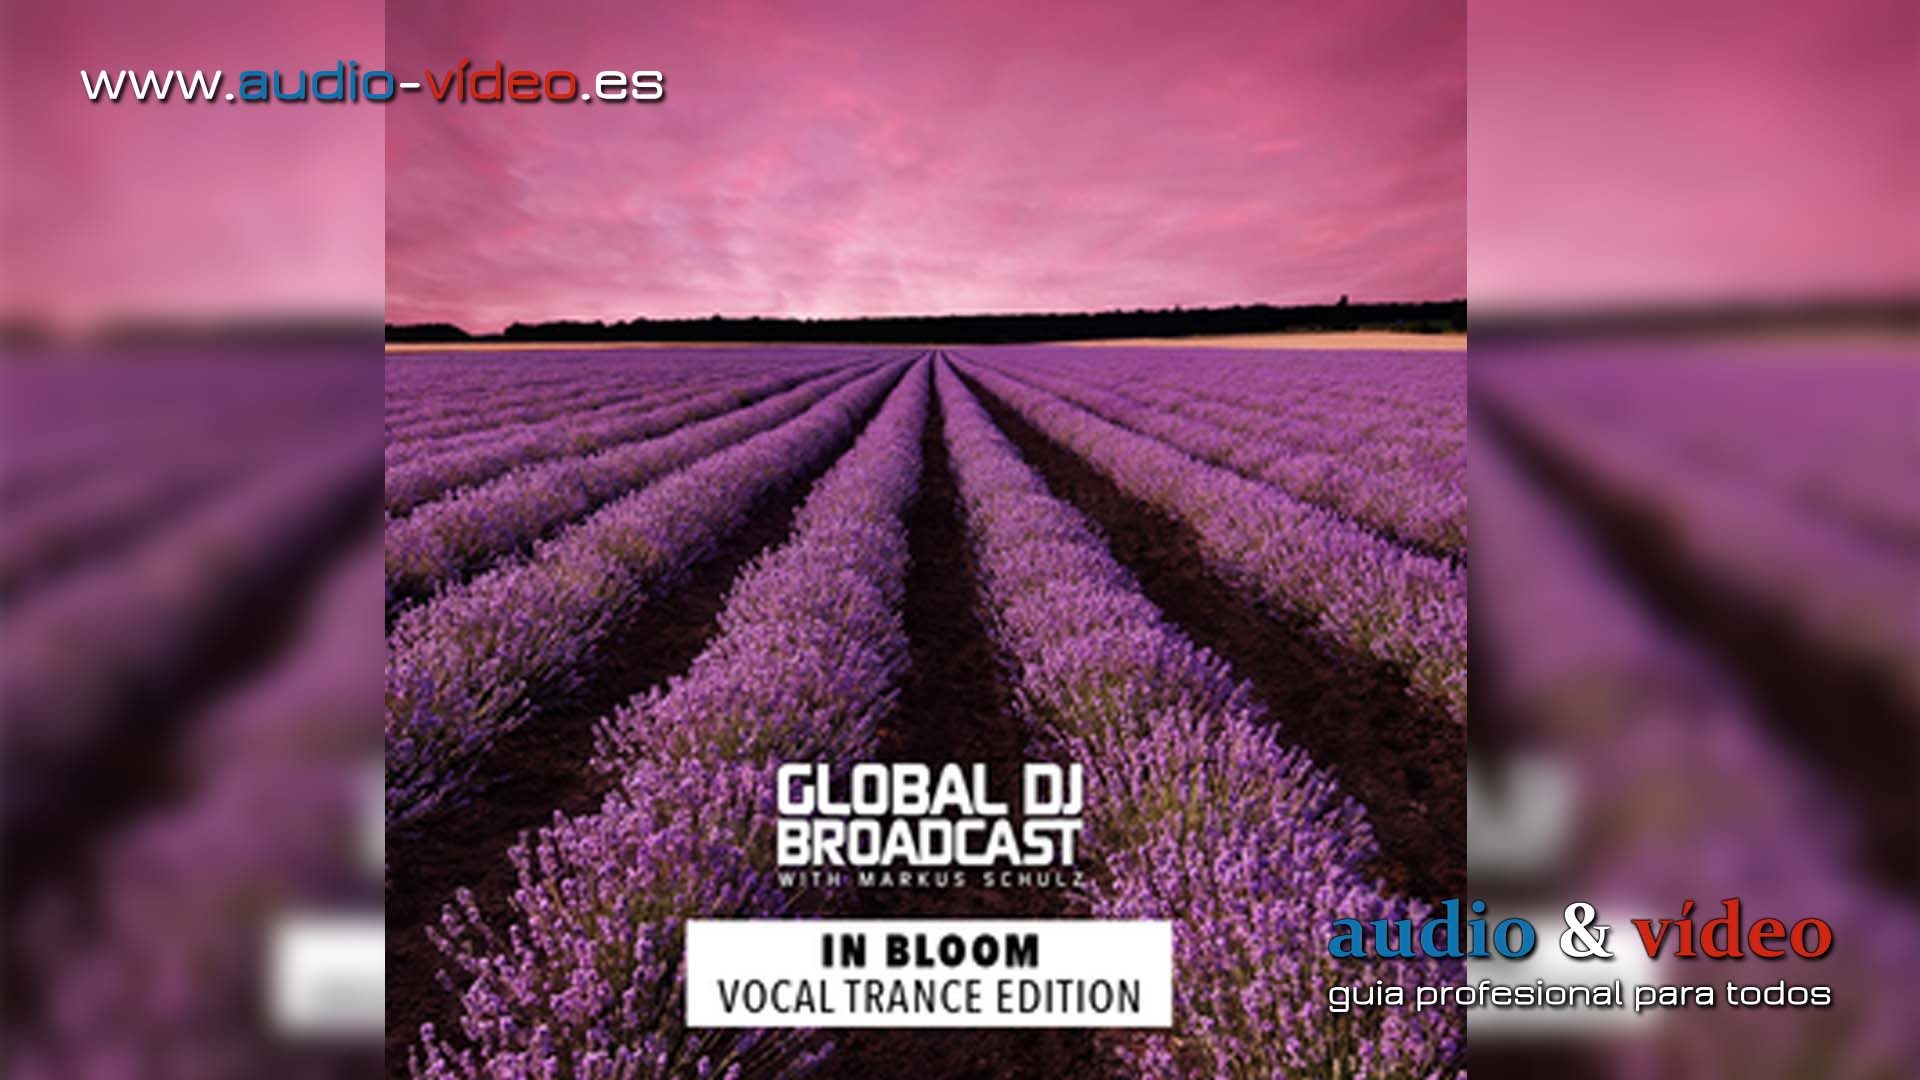 Global DJ Broadcast Apr 20 2017 – In Bloom